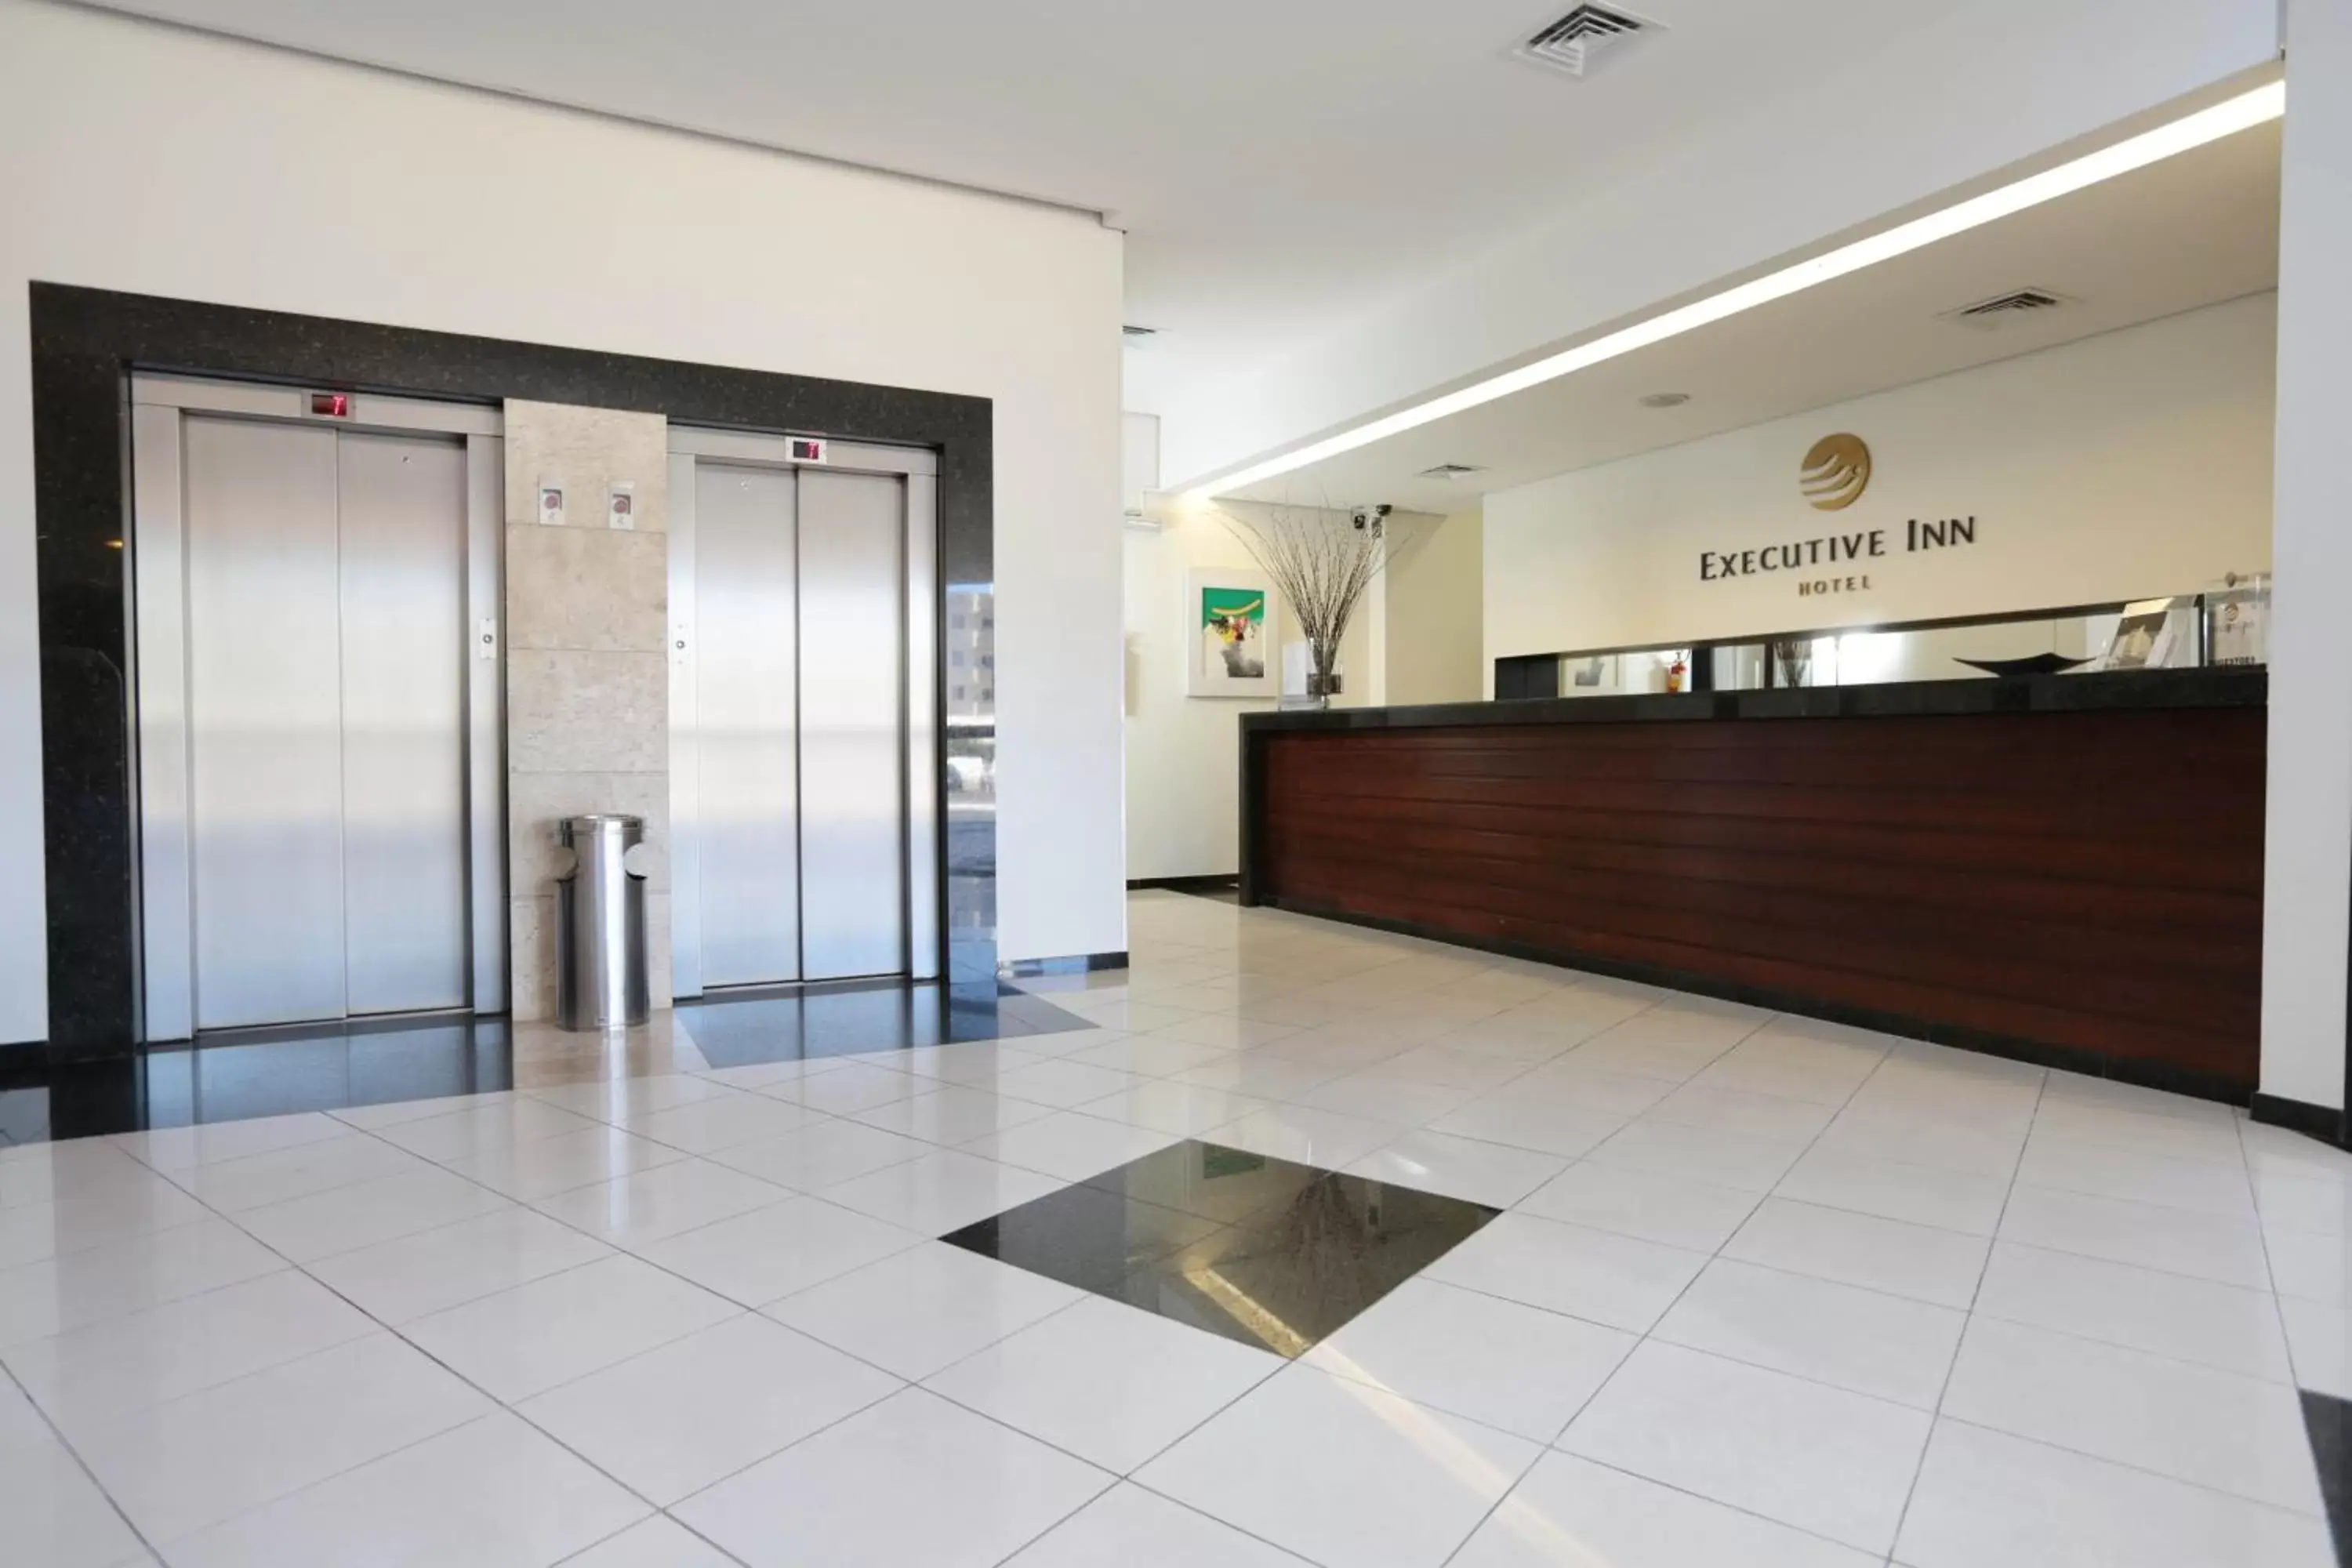 Lobby or reception, Lobby/Reception in Executive Inn Hotel